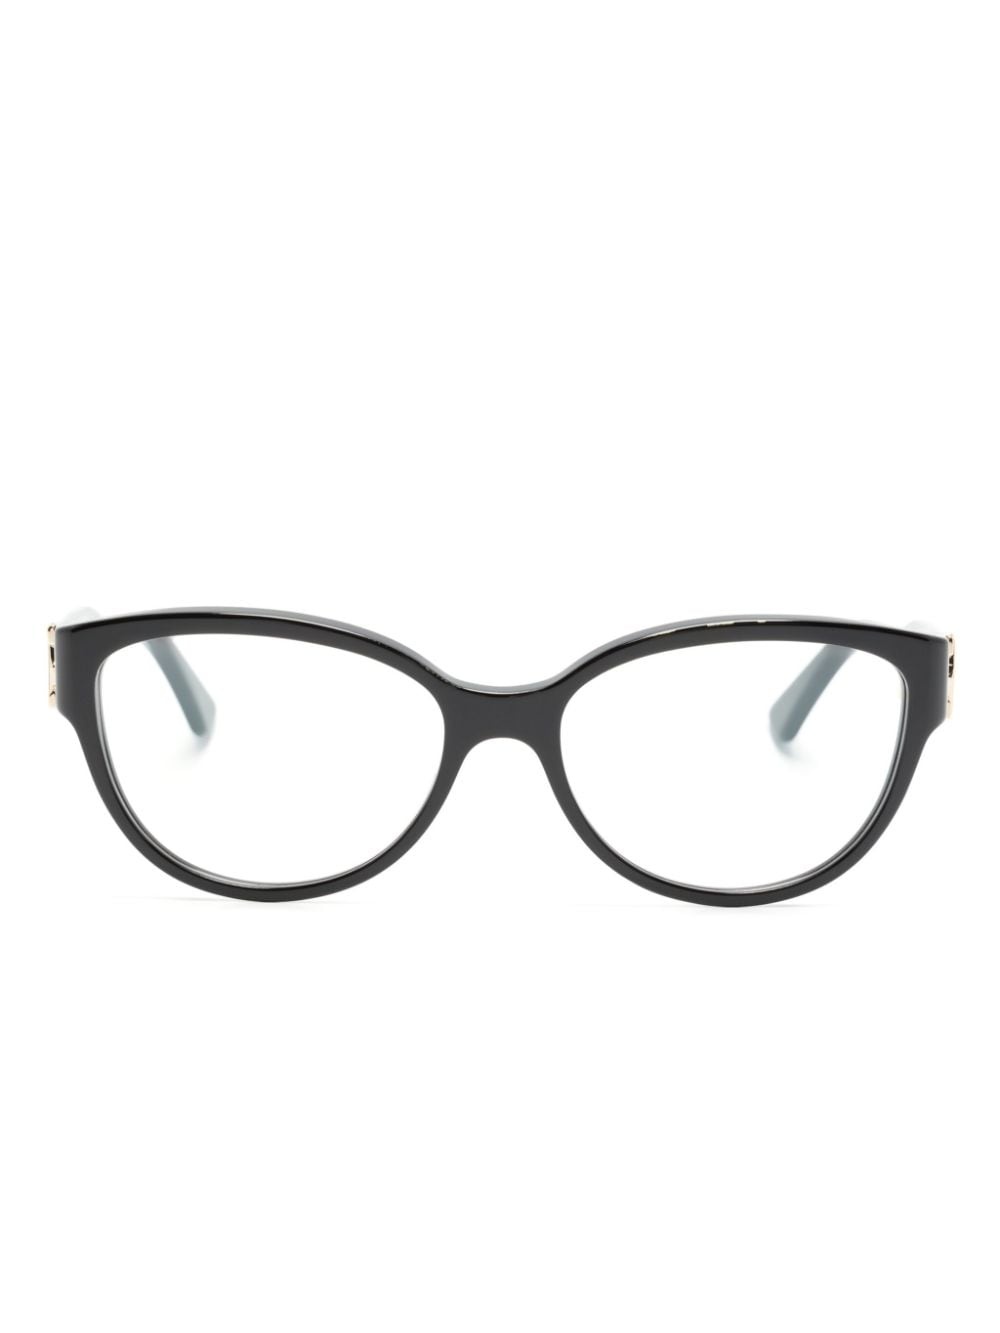 Duplo C cat-eye glasses - 1